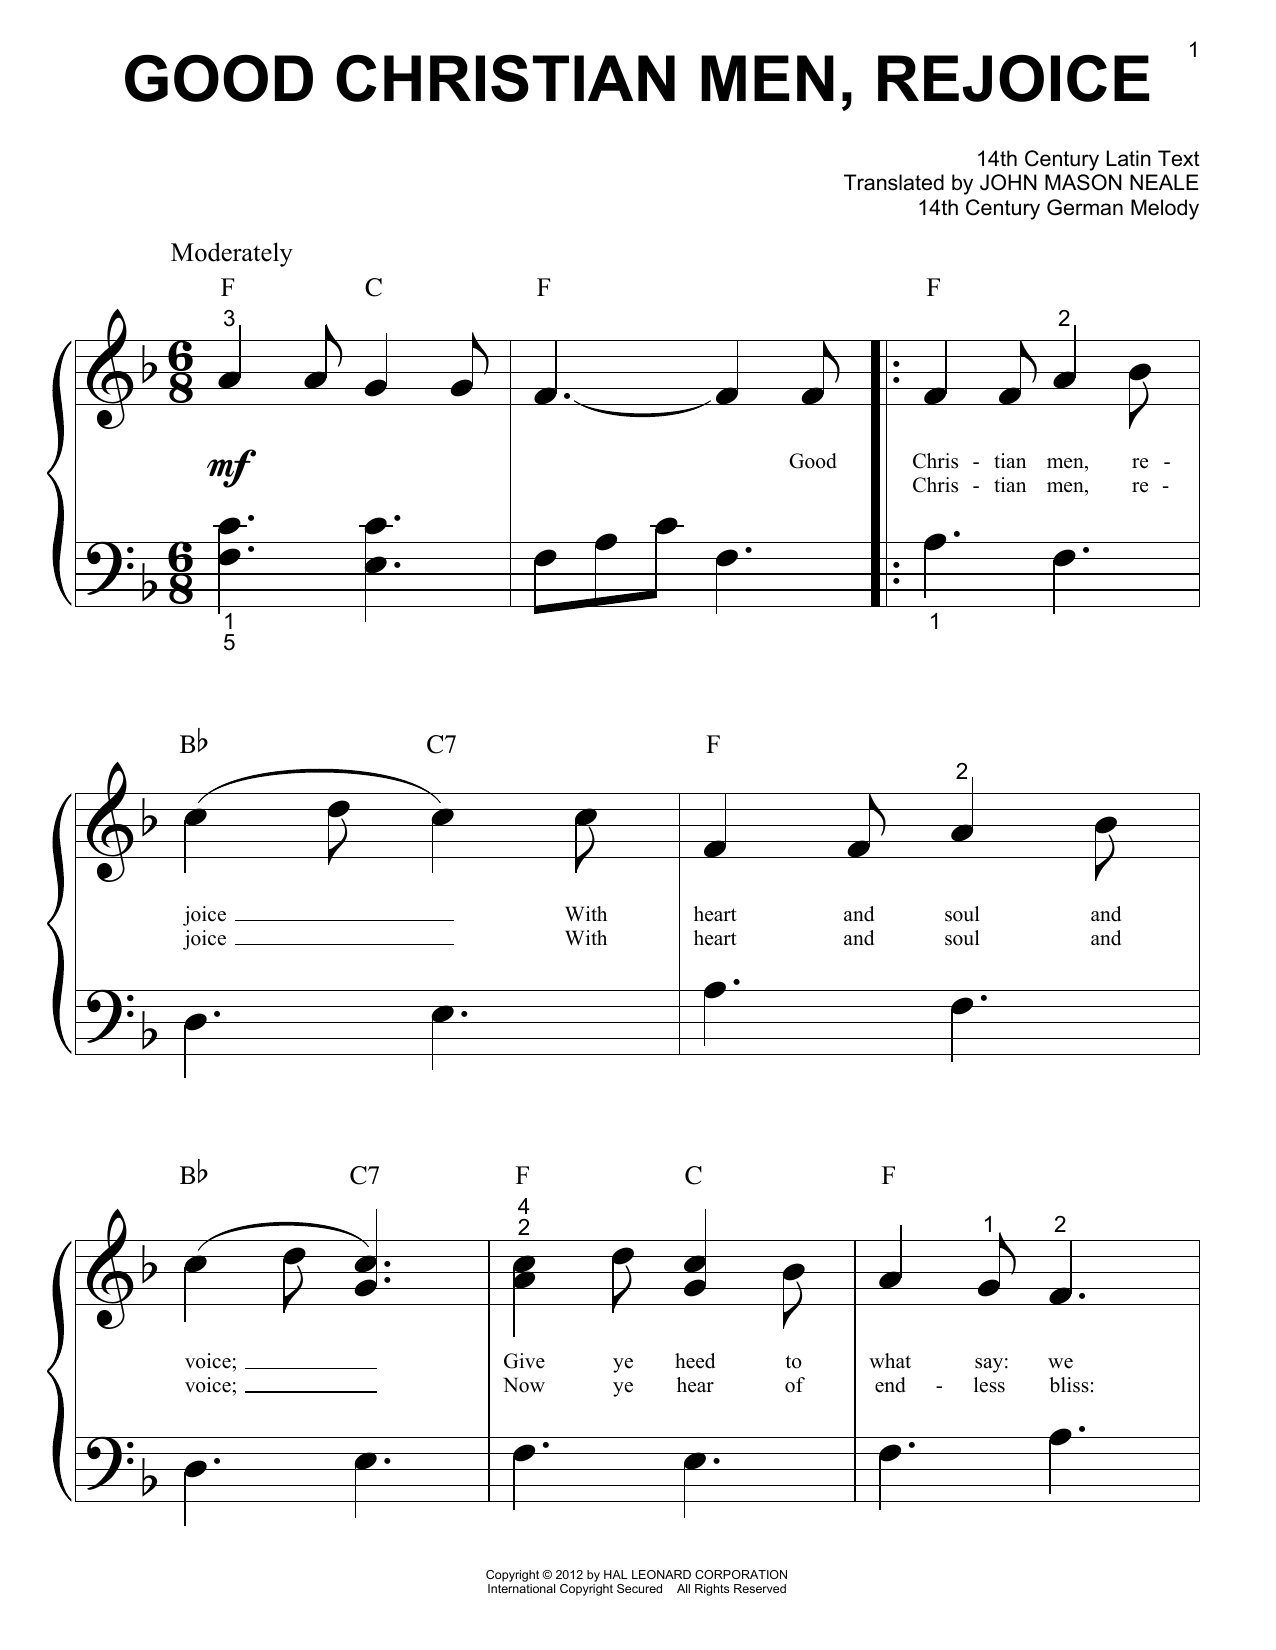 Christmas Carol Good Christian Men Rejoice Sheet Music Notes & Chords for Piano (Big Notes) - Download or Print PDF